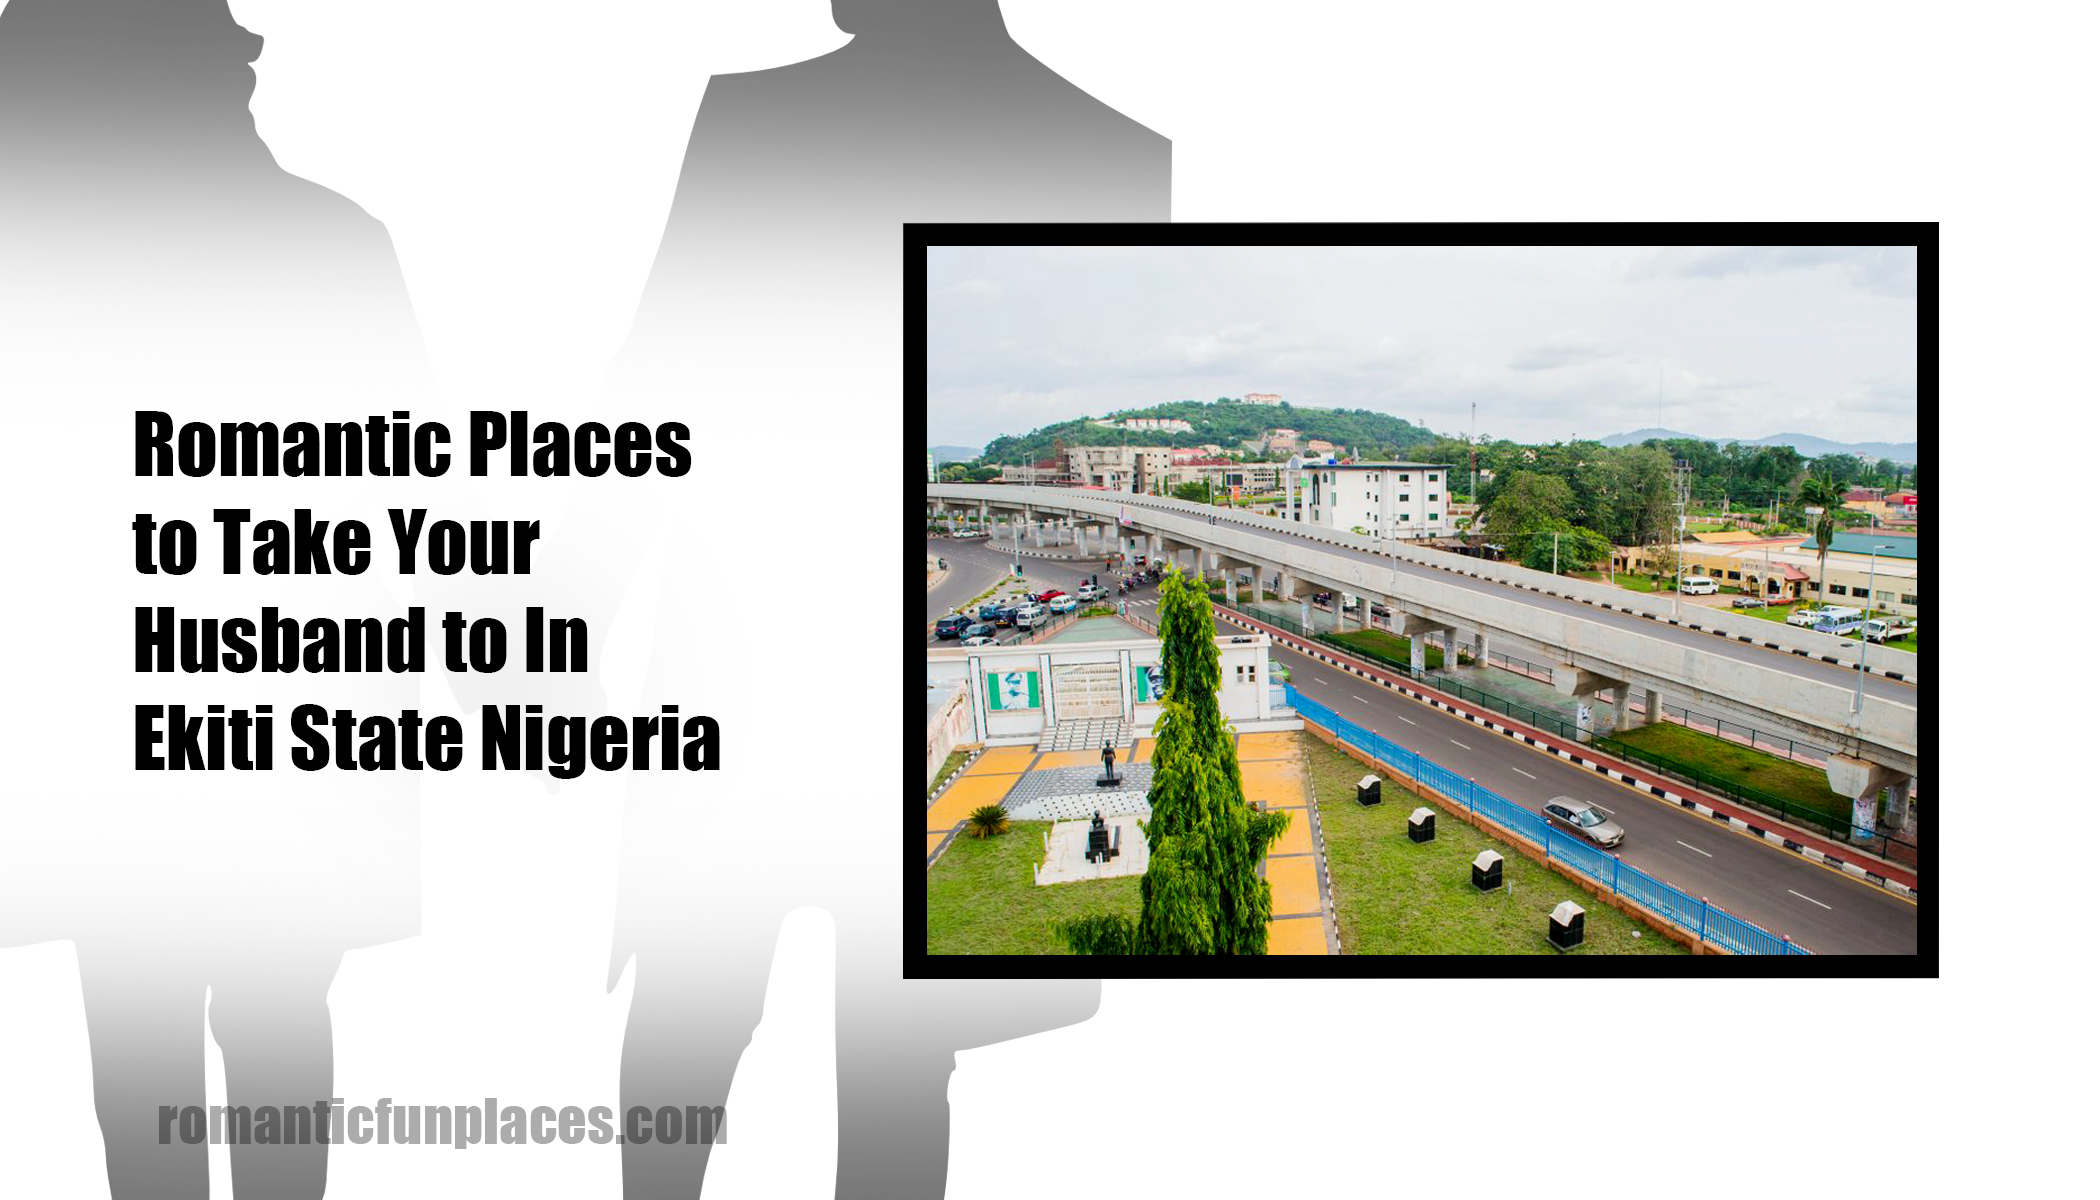 Romantic Places to Take Your Husband to In Ekiti State Nigeria